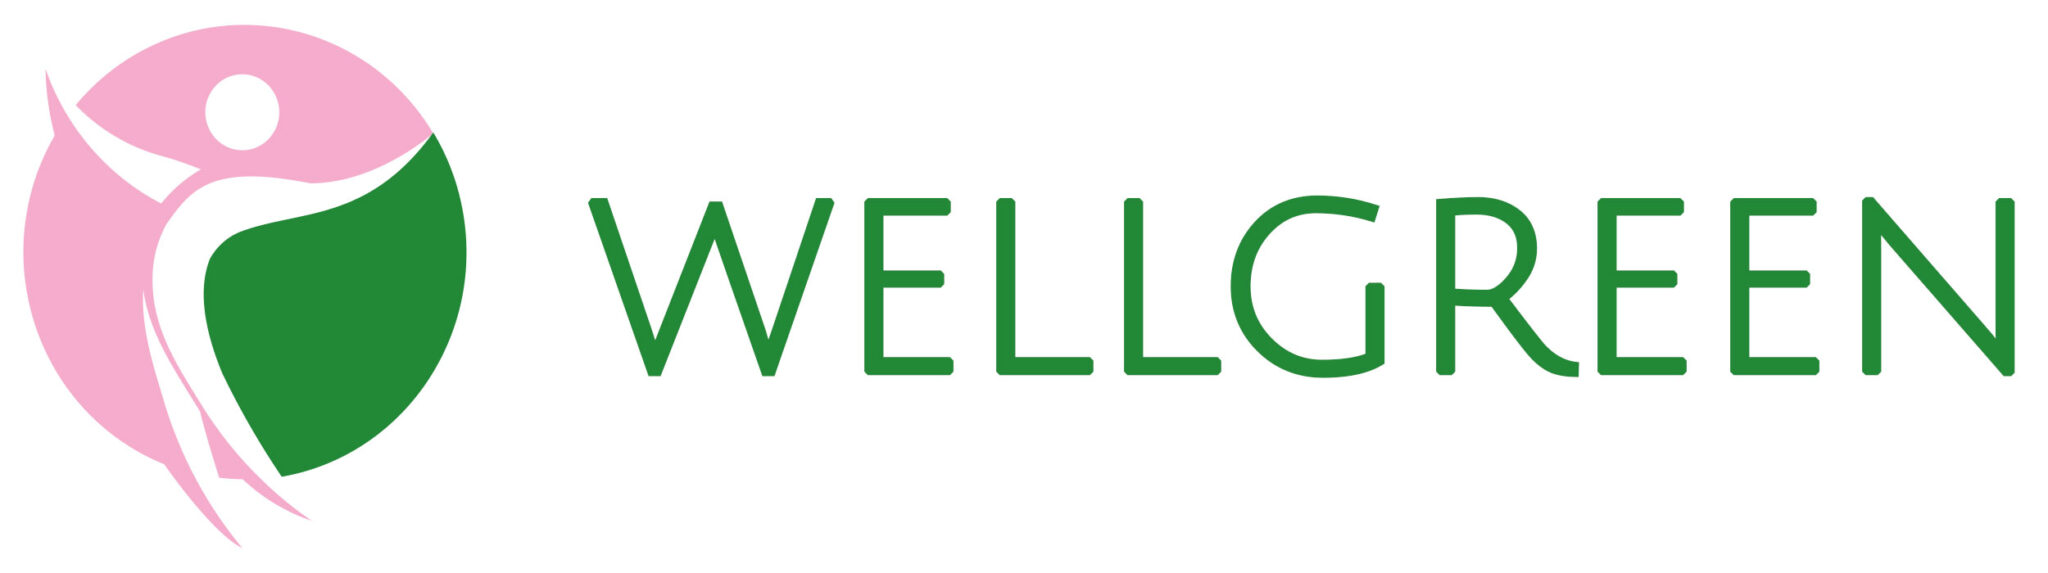 Wellgreen logo